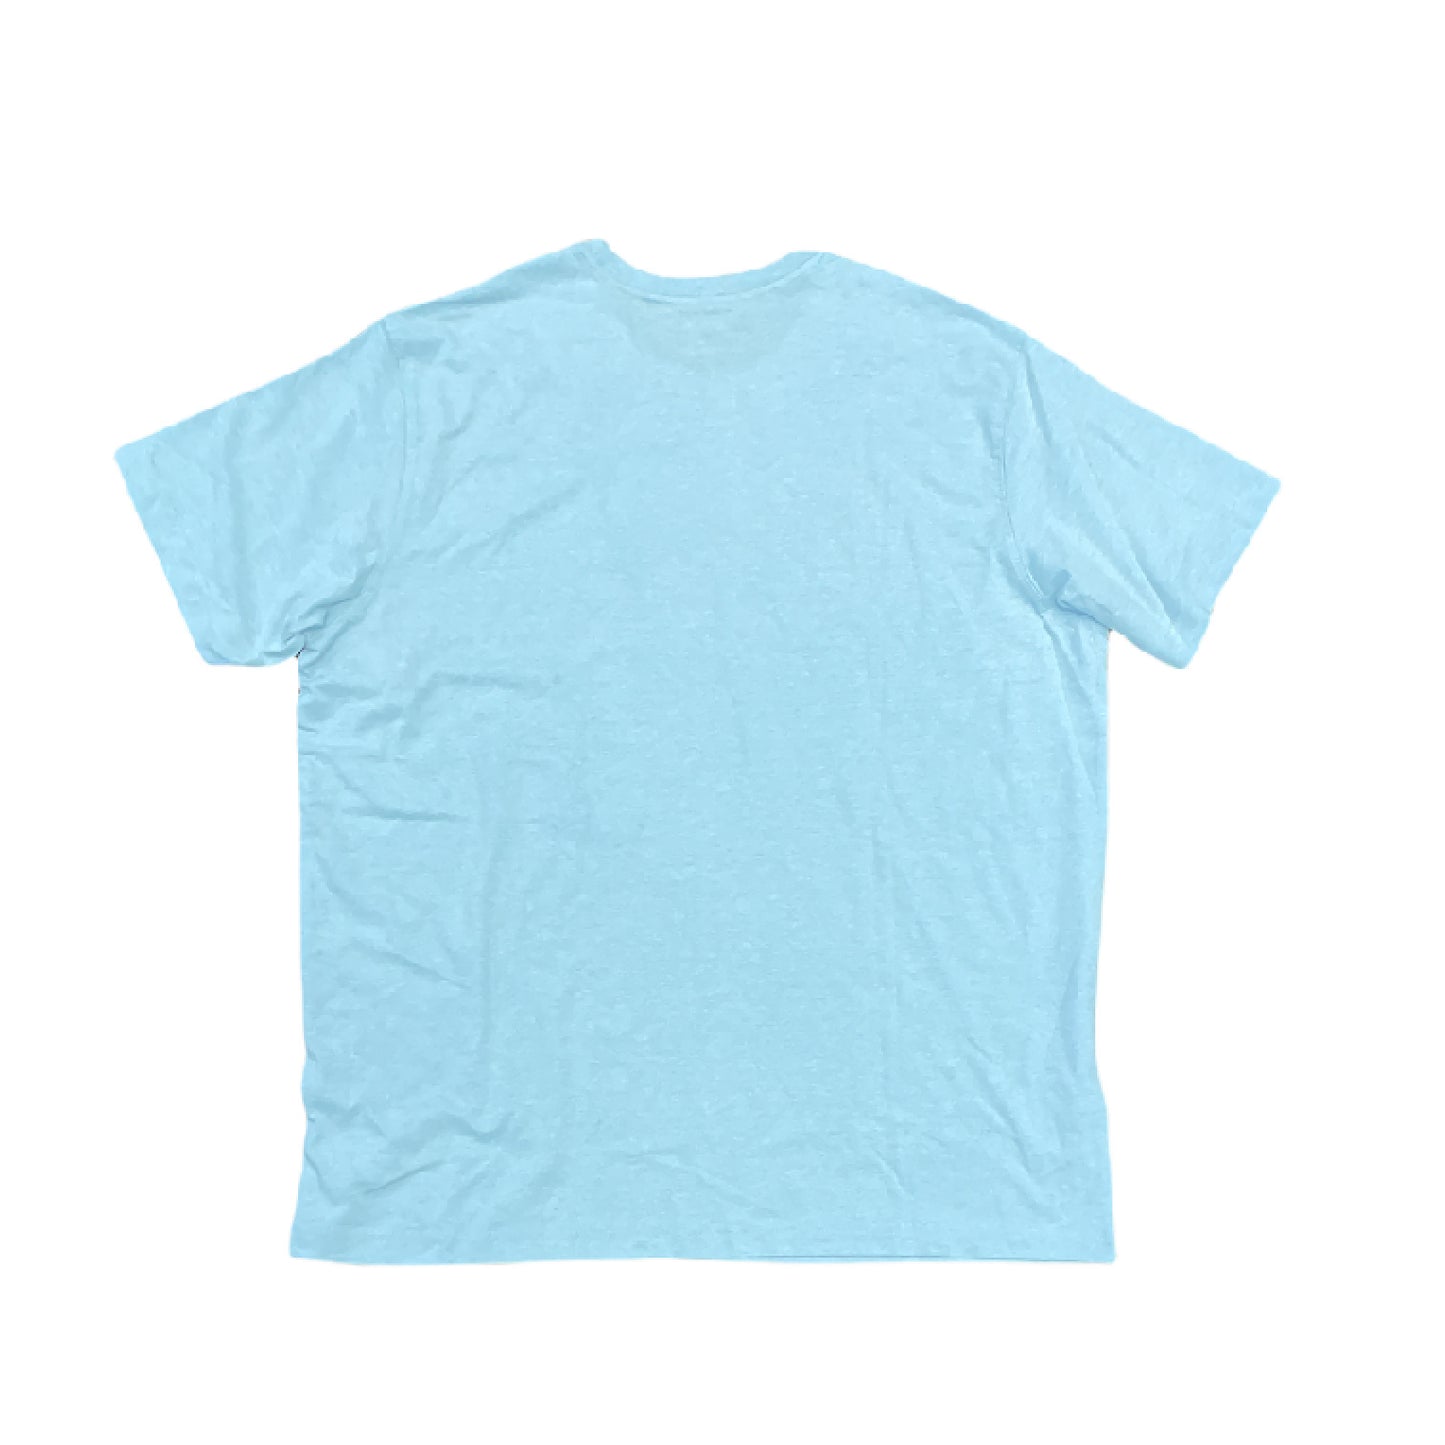 Eddie Bauer Lightweight Soft Comfort Short Sleeve Men's T-shirt